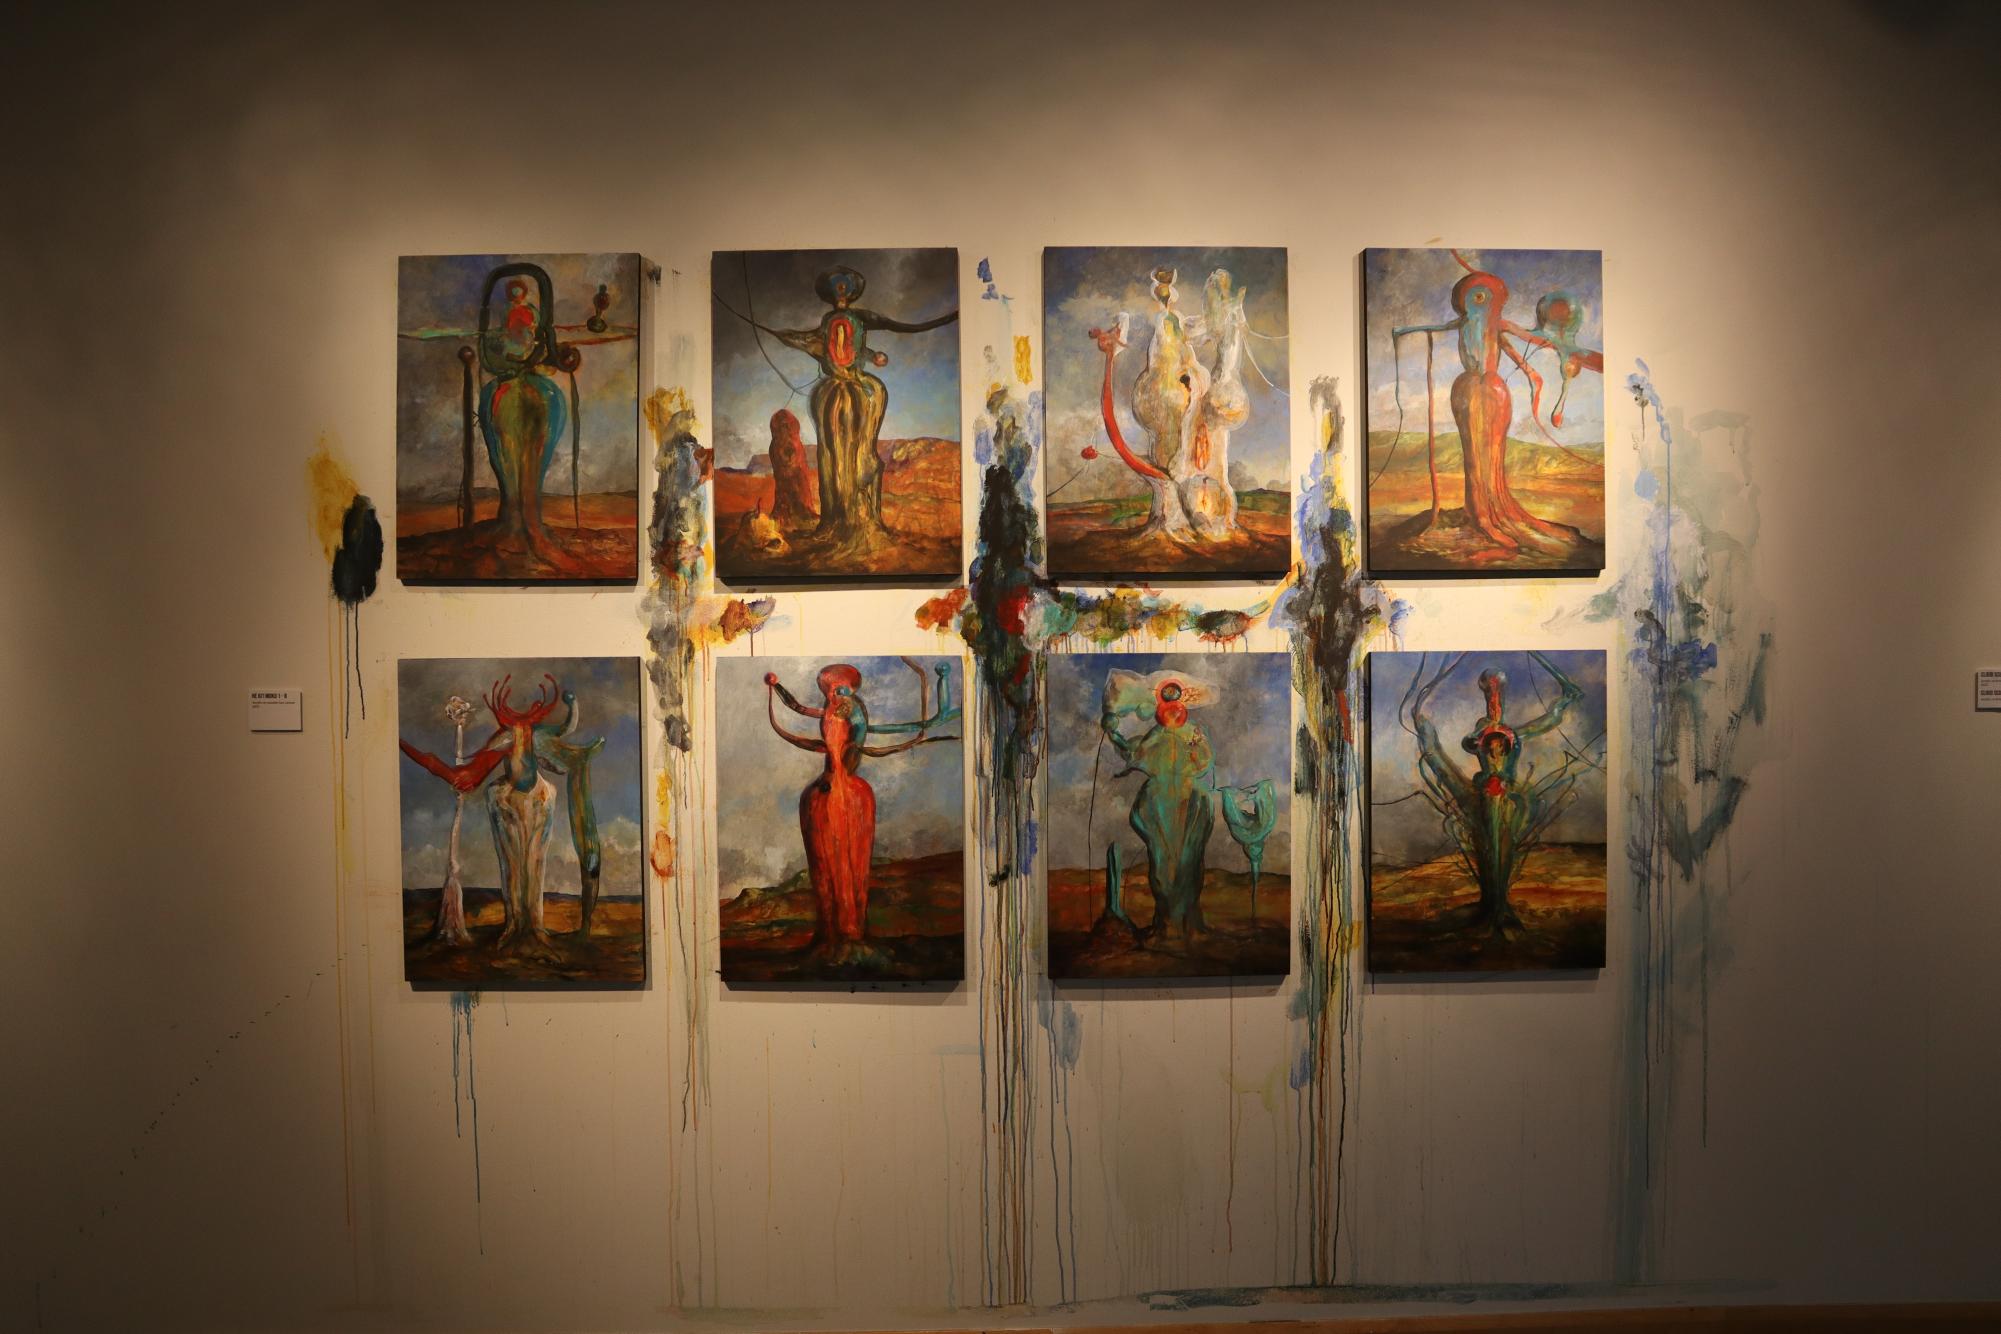 He Kii Moku 1-8, paintings by Solomon Robert Nui Enos displayed in the Gordon Art Gallery from Sept. 15 - Dec. 16.